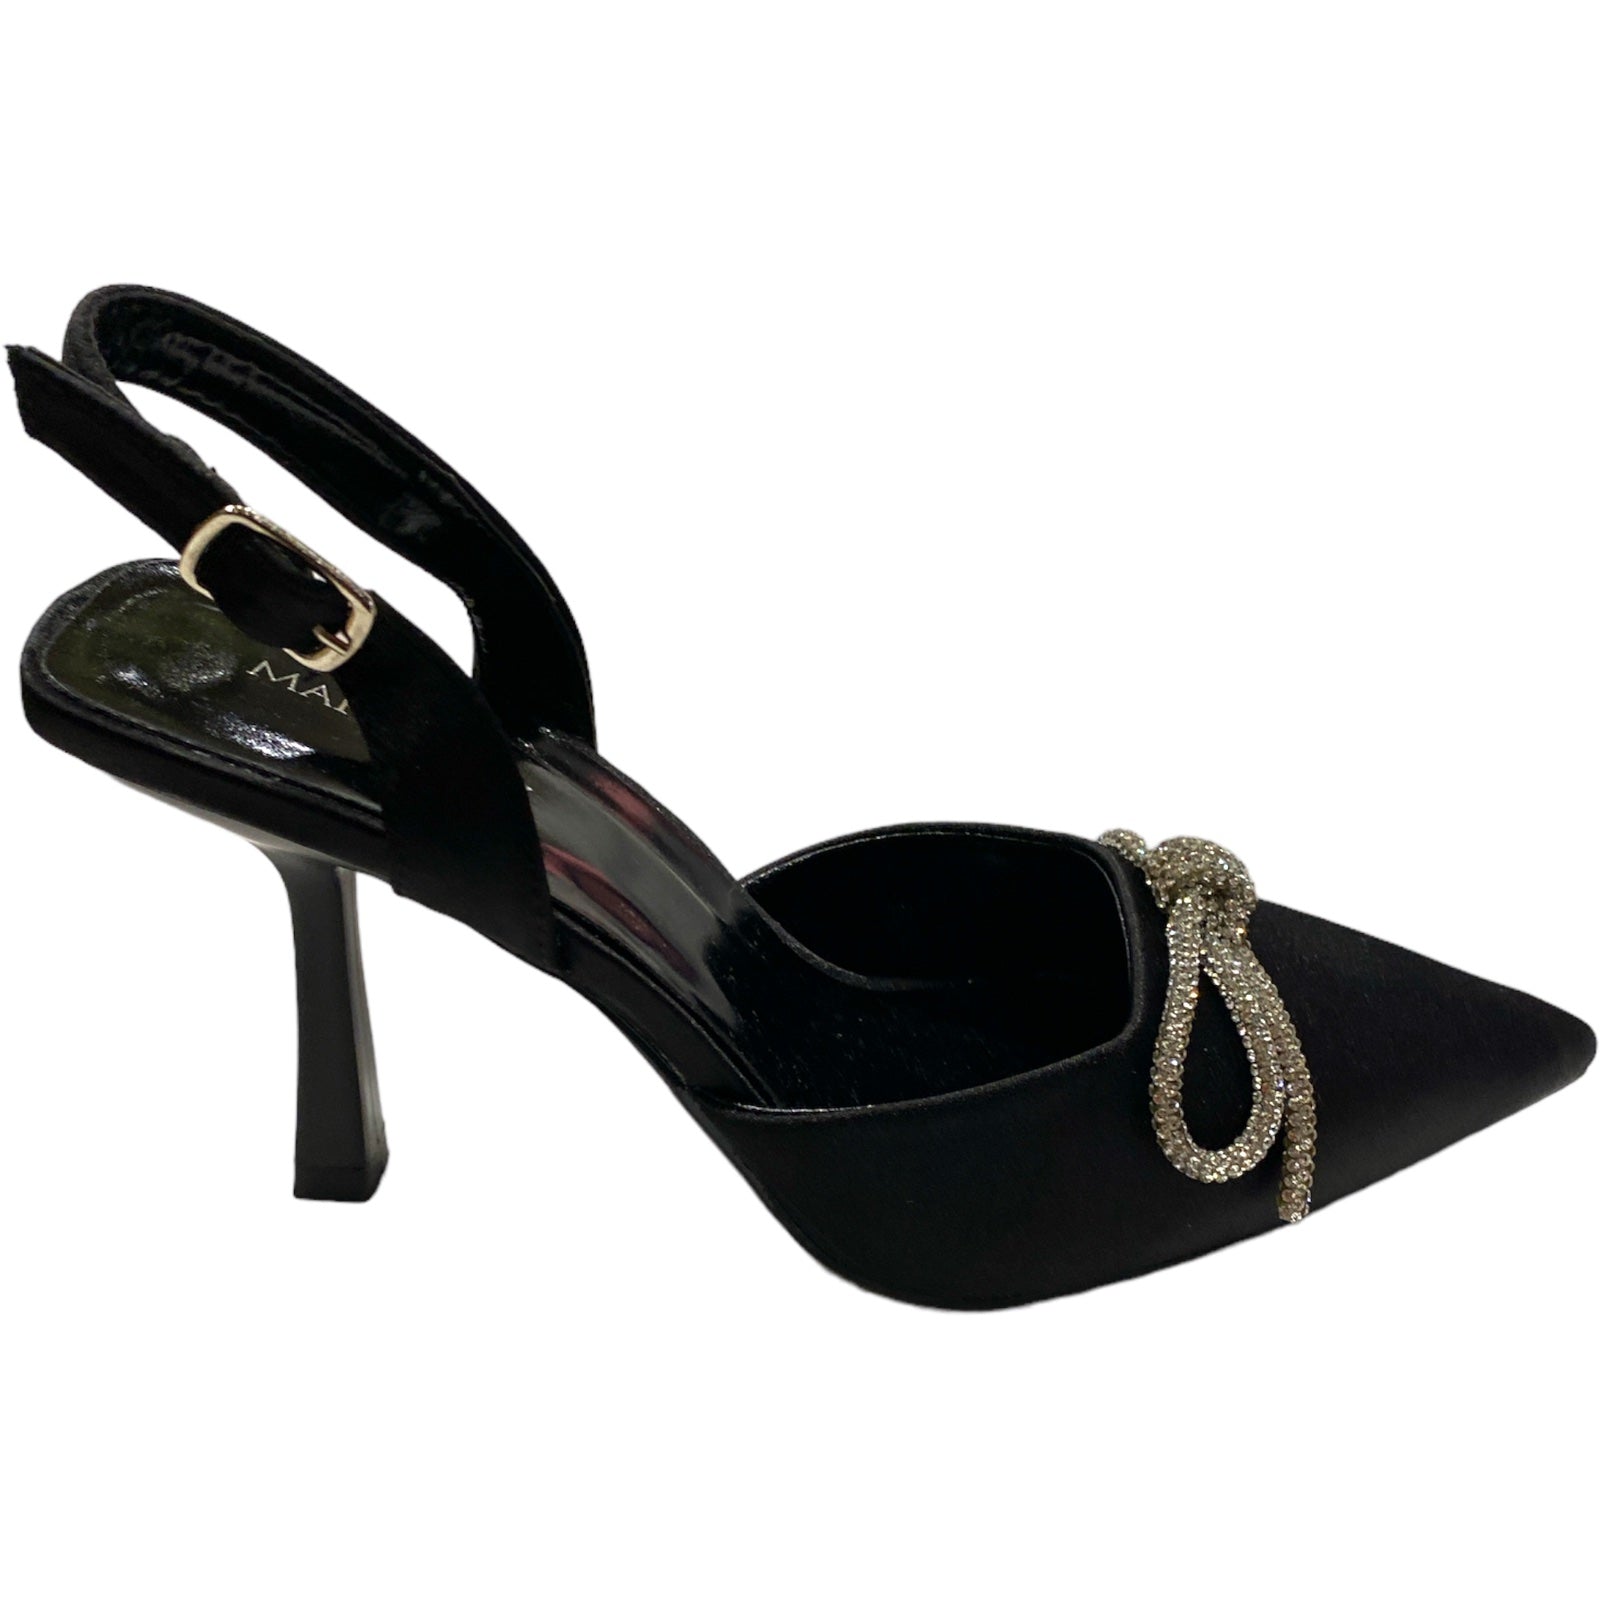 Black elegant bow shoes